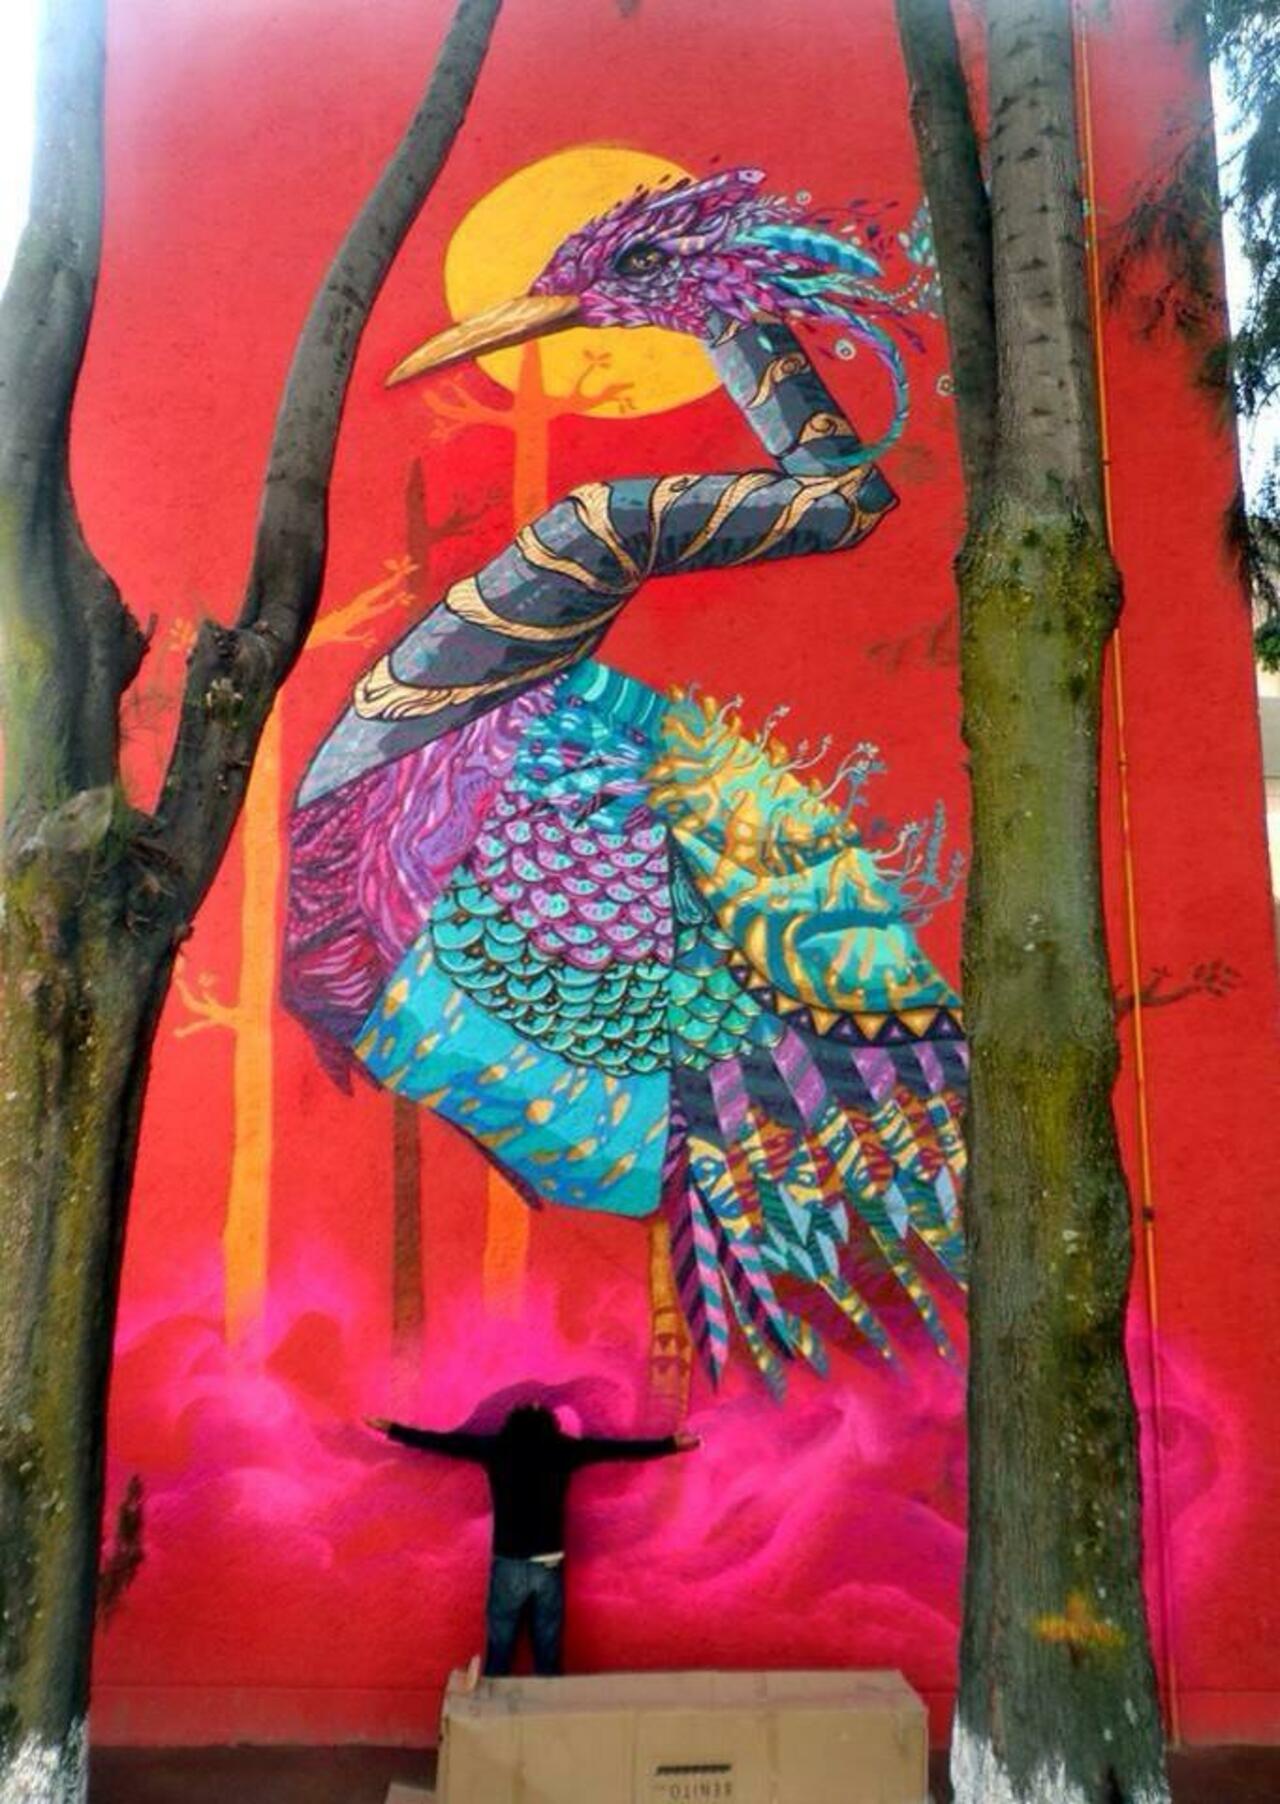 'Songs of Colour'

Sublime Nature in Street Art by NacHo Wm ft. Farid Rueda 

#art #arte #graffiti #streetart http://t.co/4QLVfVxHw9